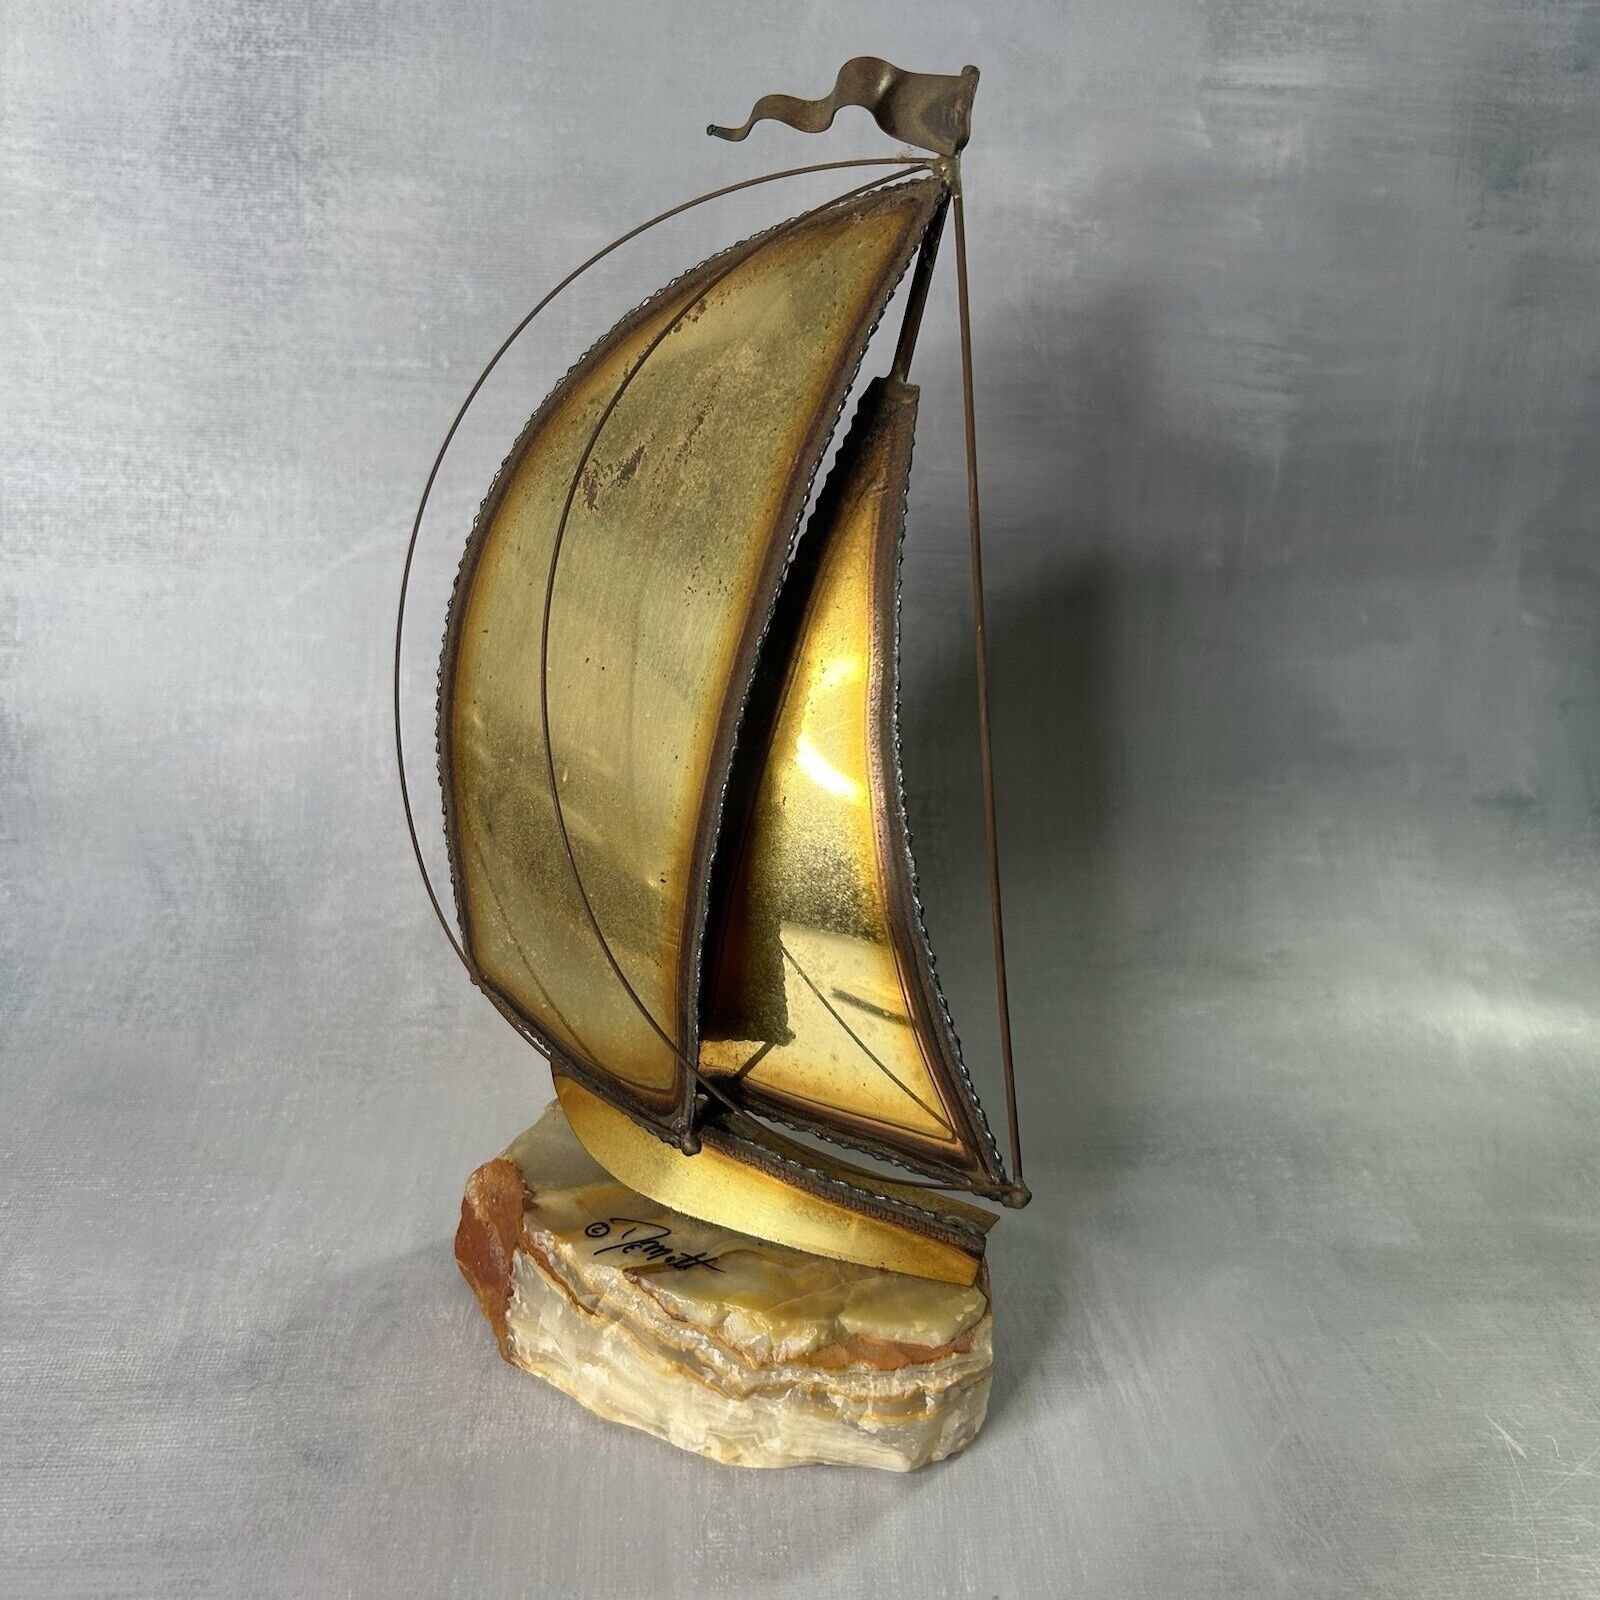 Don & John DeMott Signed Brass 2 Sail Sailboat Sculpture on Onyx Stone Base